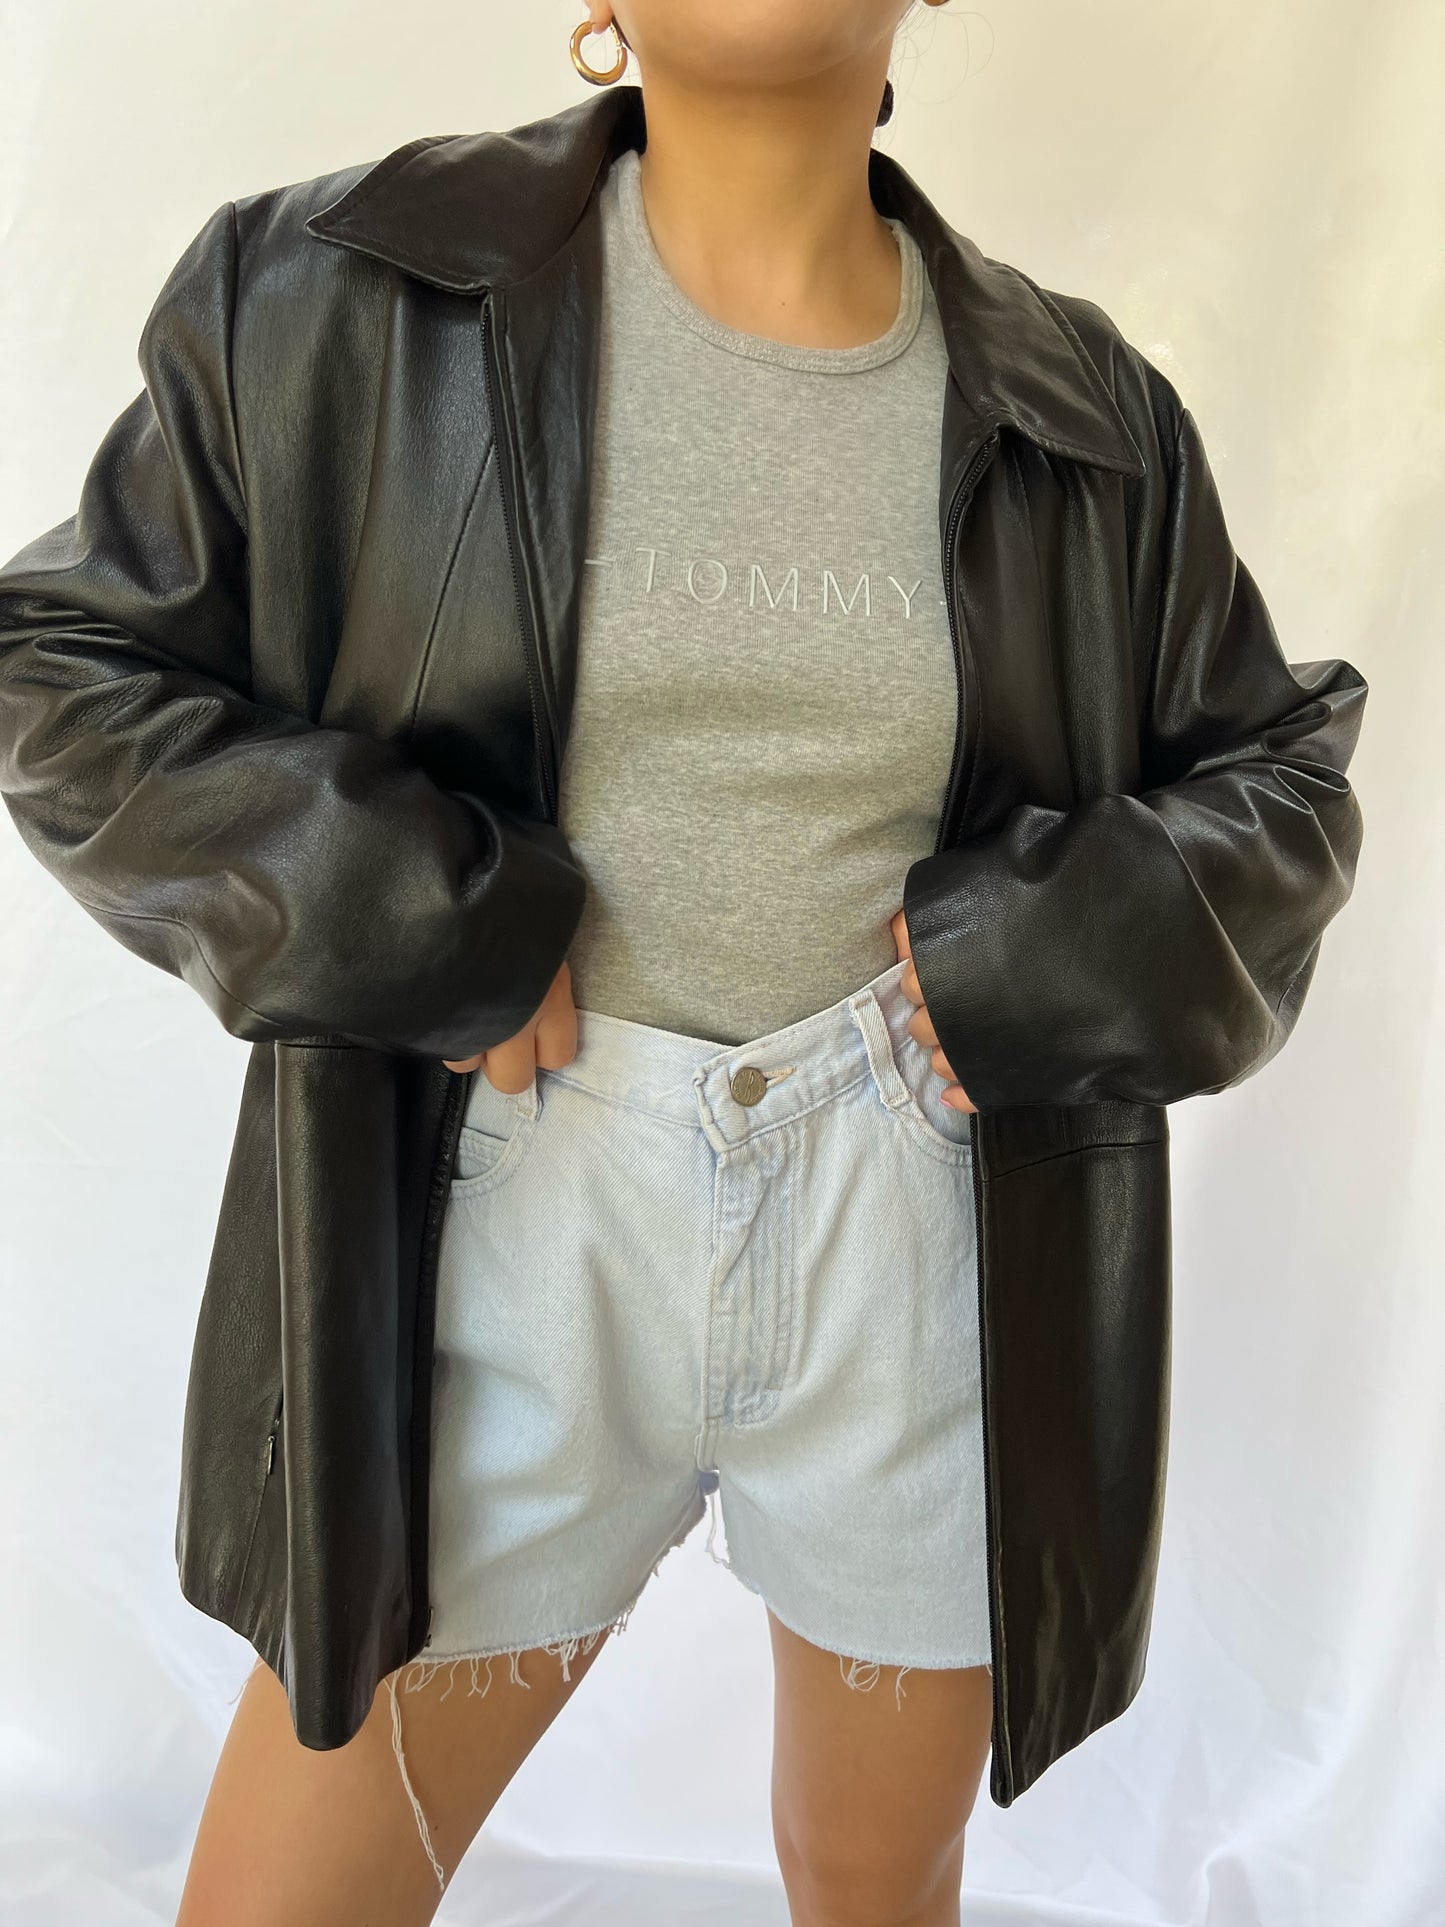 Black Wilsons Leather Zip Up Jacket - XL